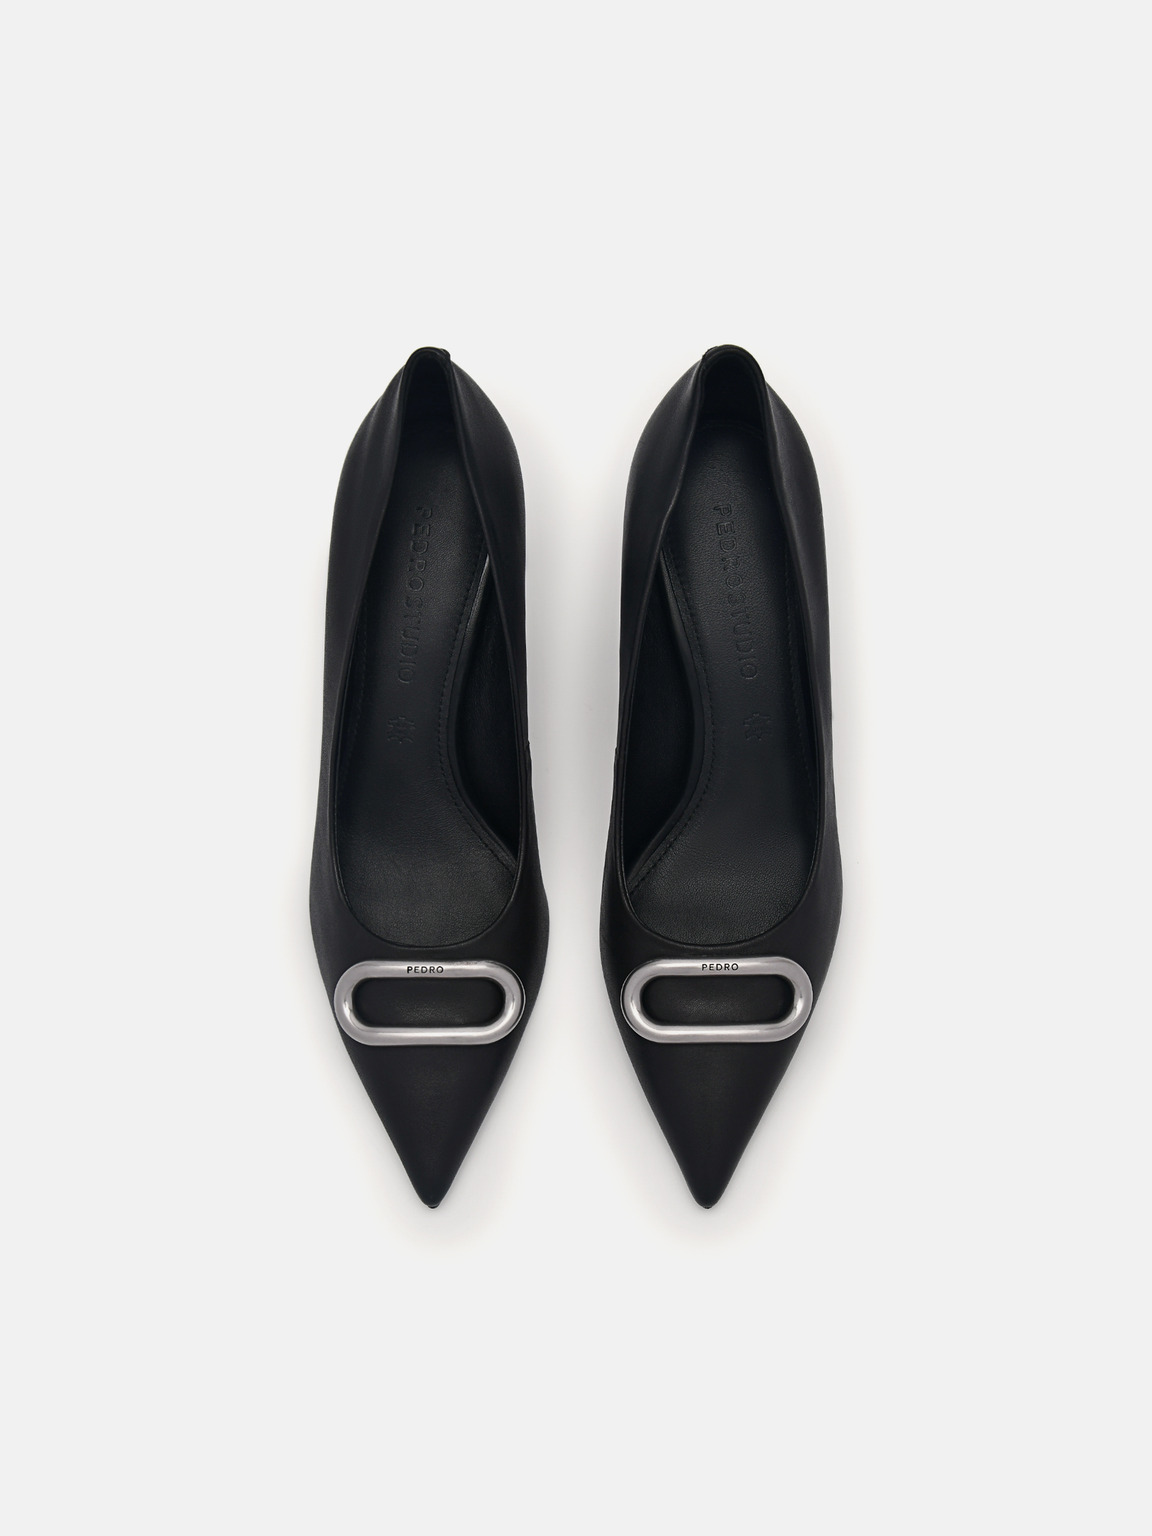 PEDRO工作室Kate皮革一腳蹬高跟鞋, 黑色